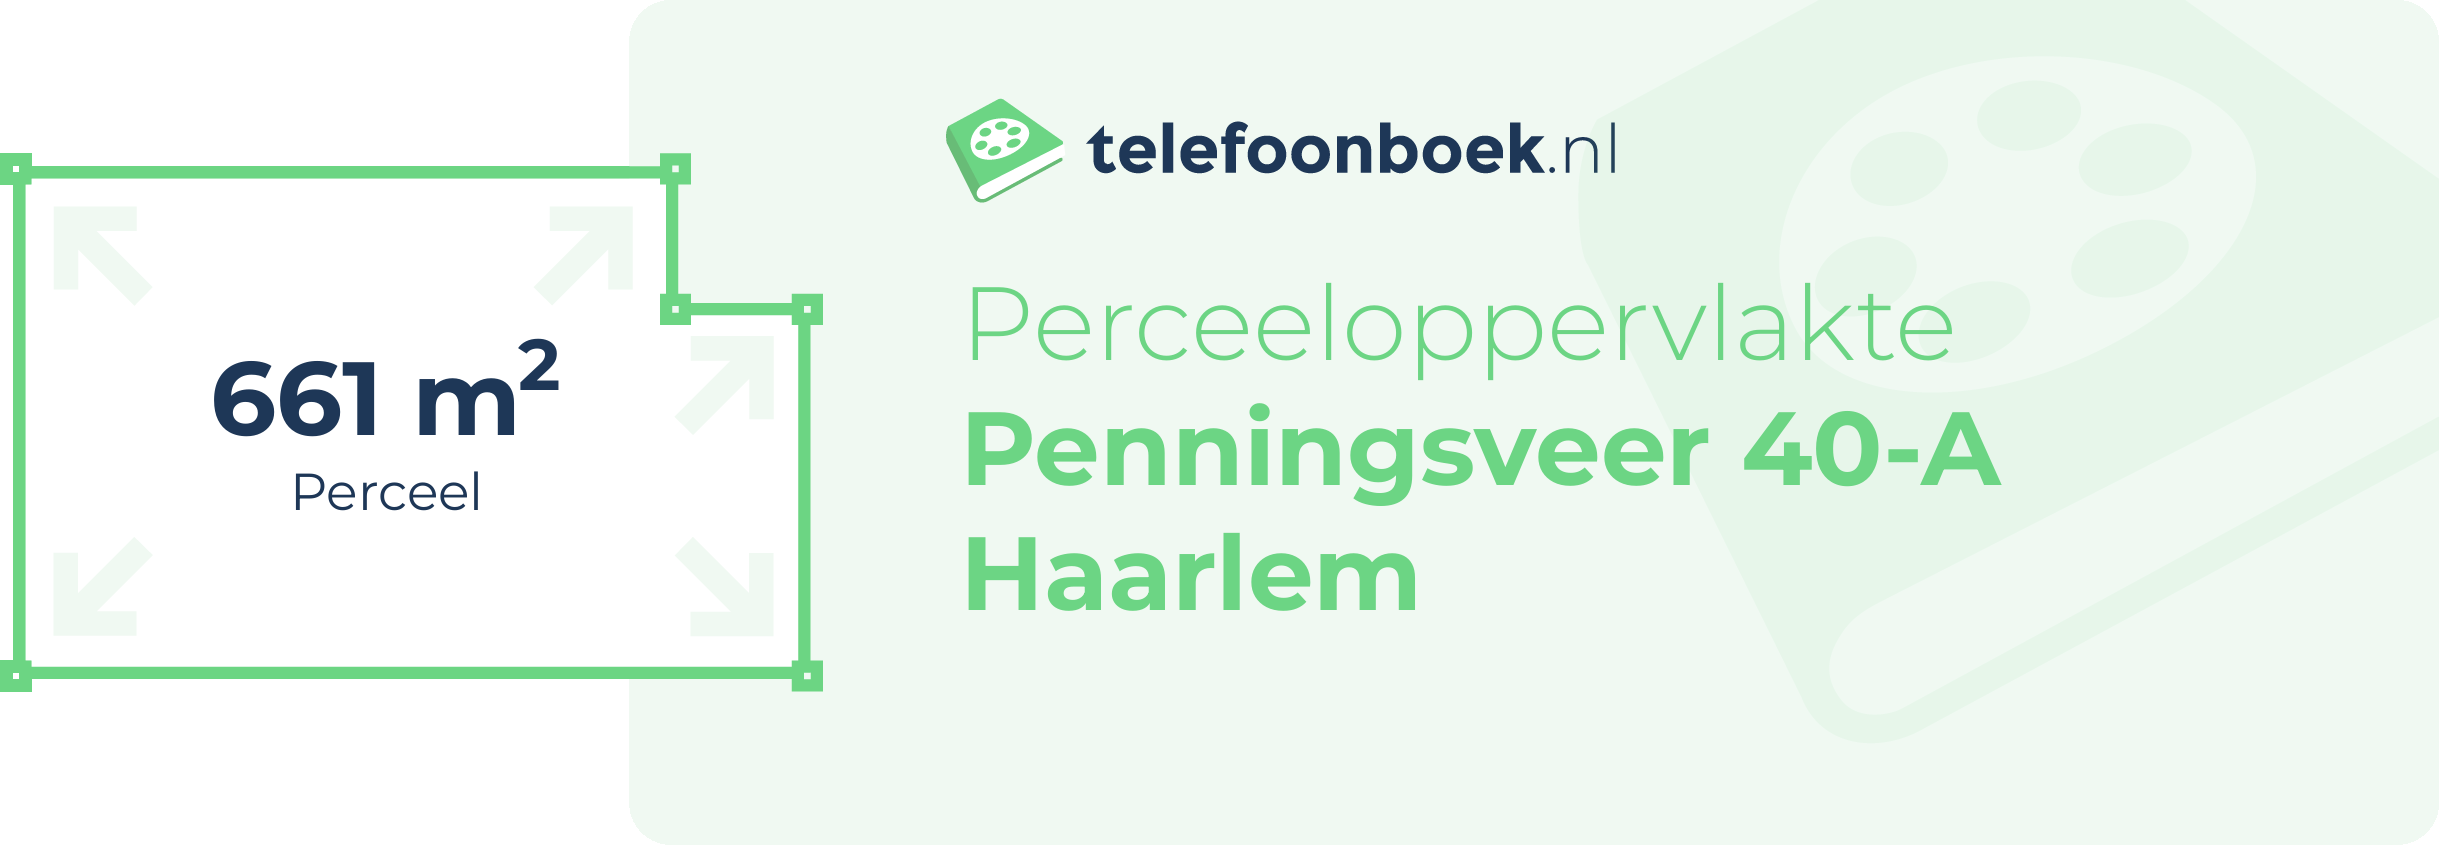 Perceeloppervlakte Penningsveer 40-A Haarlem